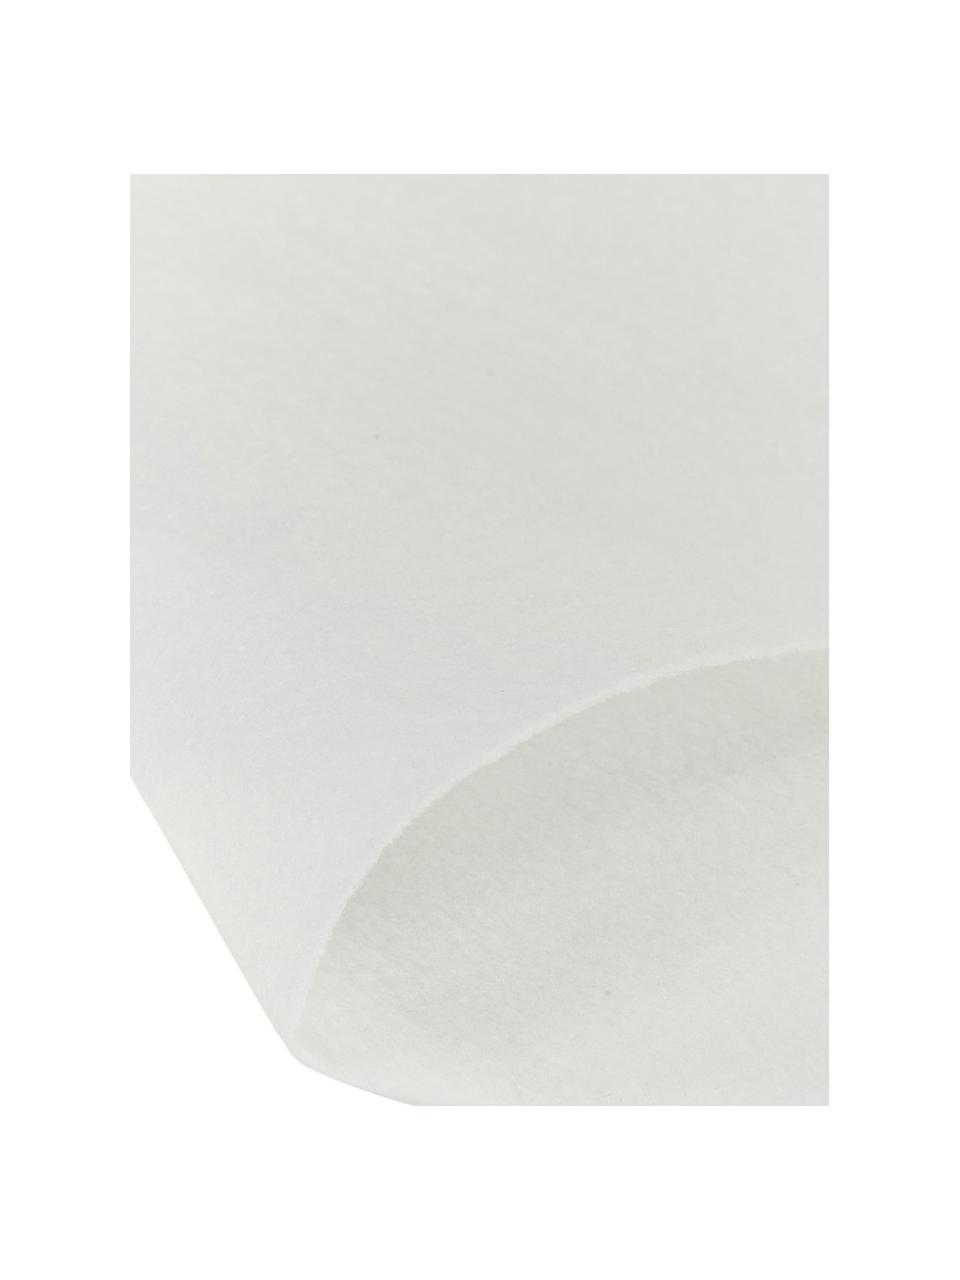 Base de alfombra My Slip Stop, Vellón de poliéster con revestimiento antideslizante, Blanco crema, An 180 x L 270 cm